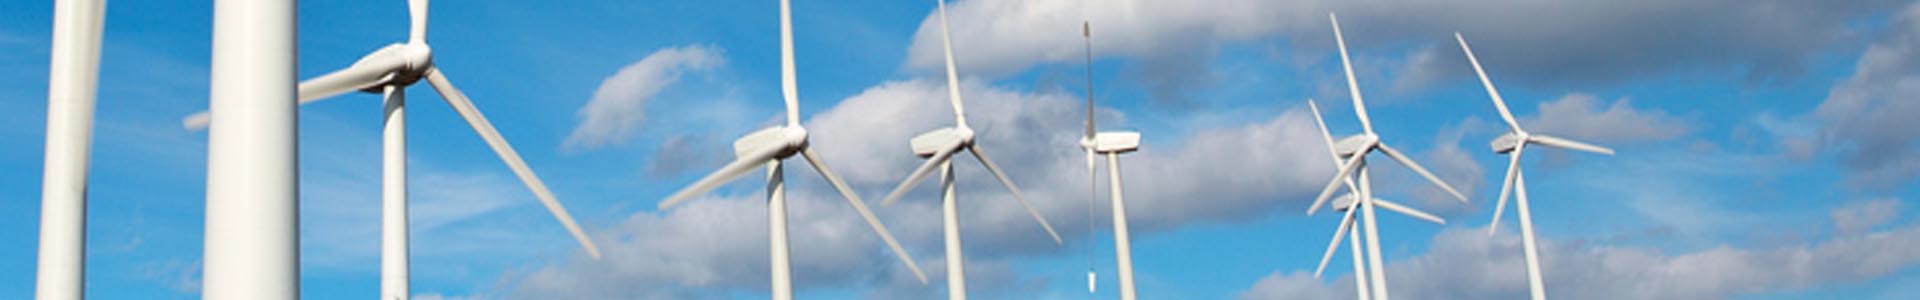 Power Generation Wind Turbines